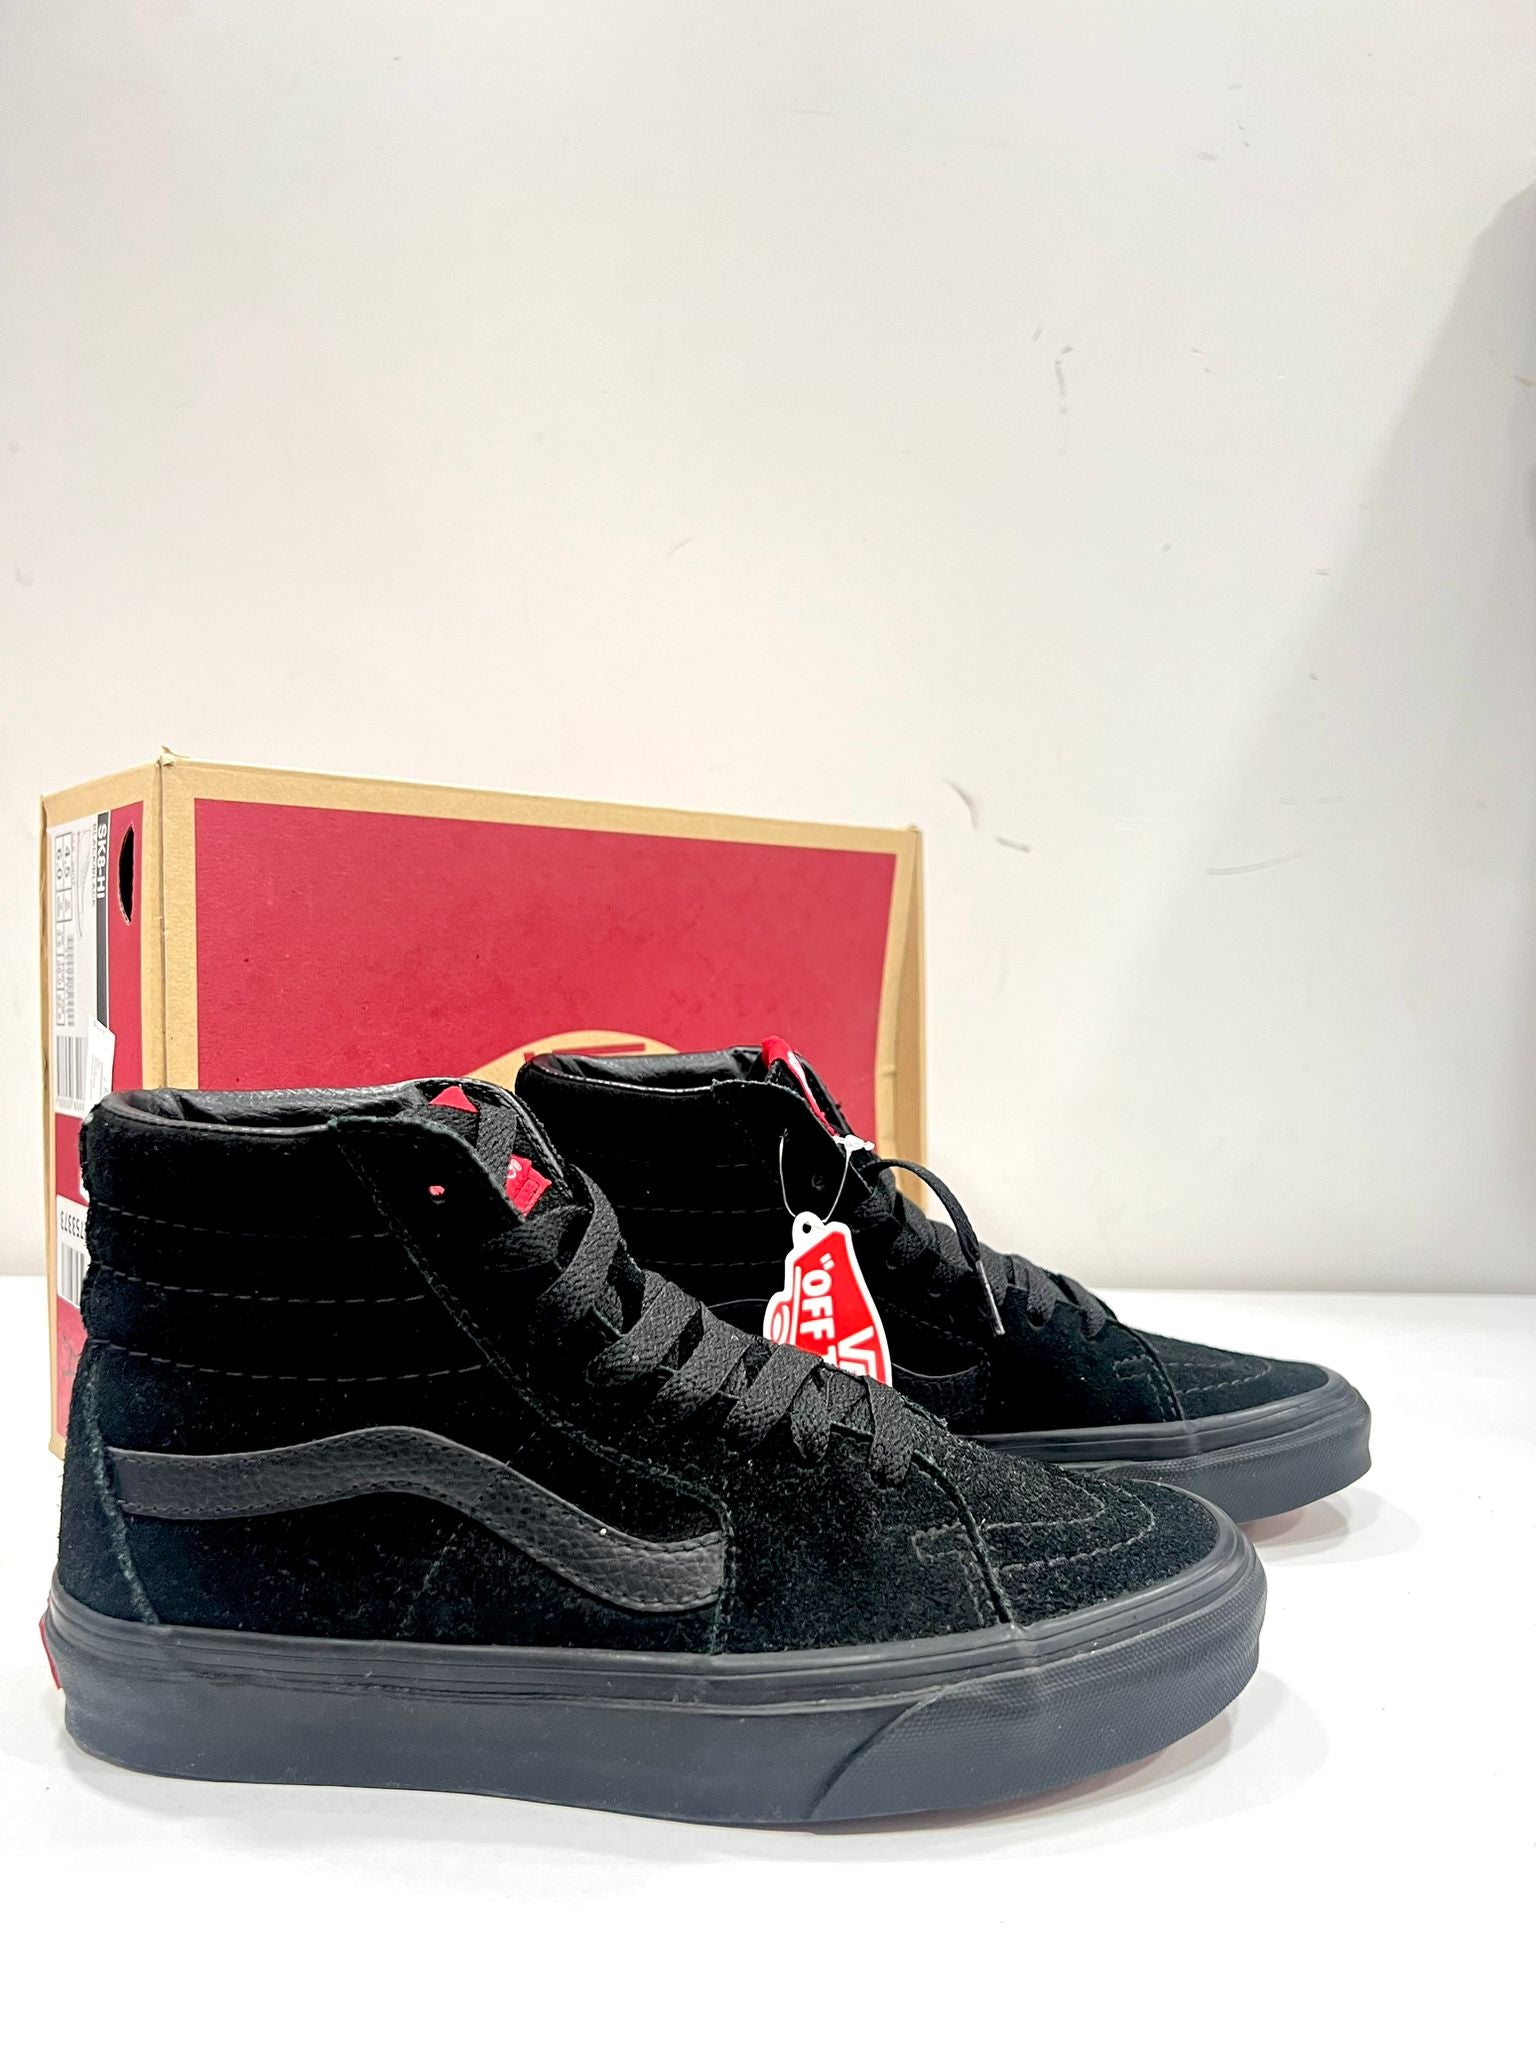 Sneakers Vans  Sk8-Hi Black/Black  VN000D5IBKA